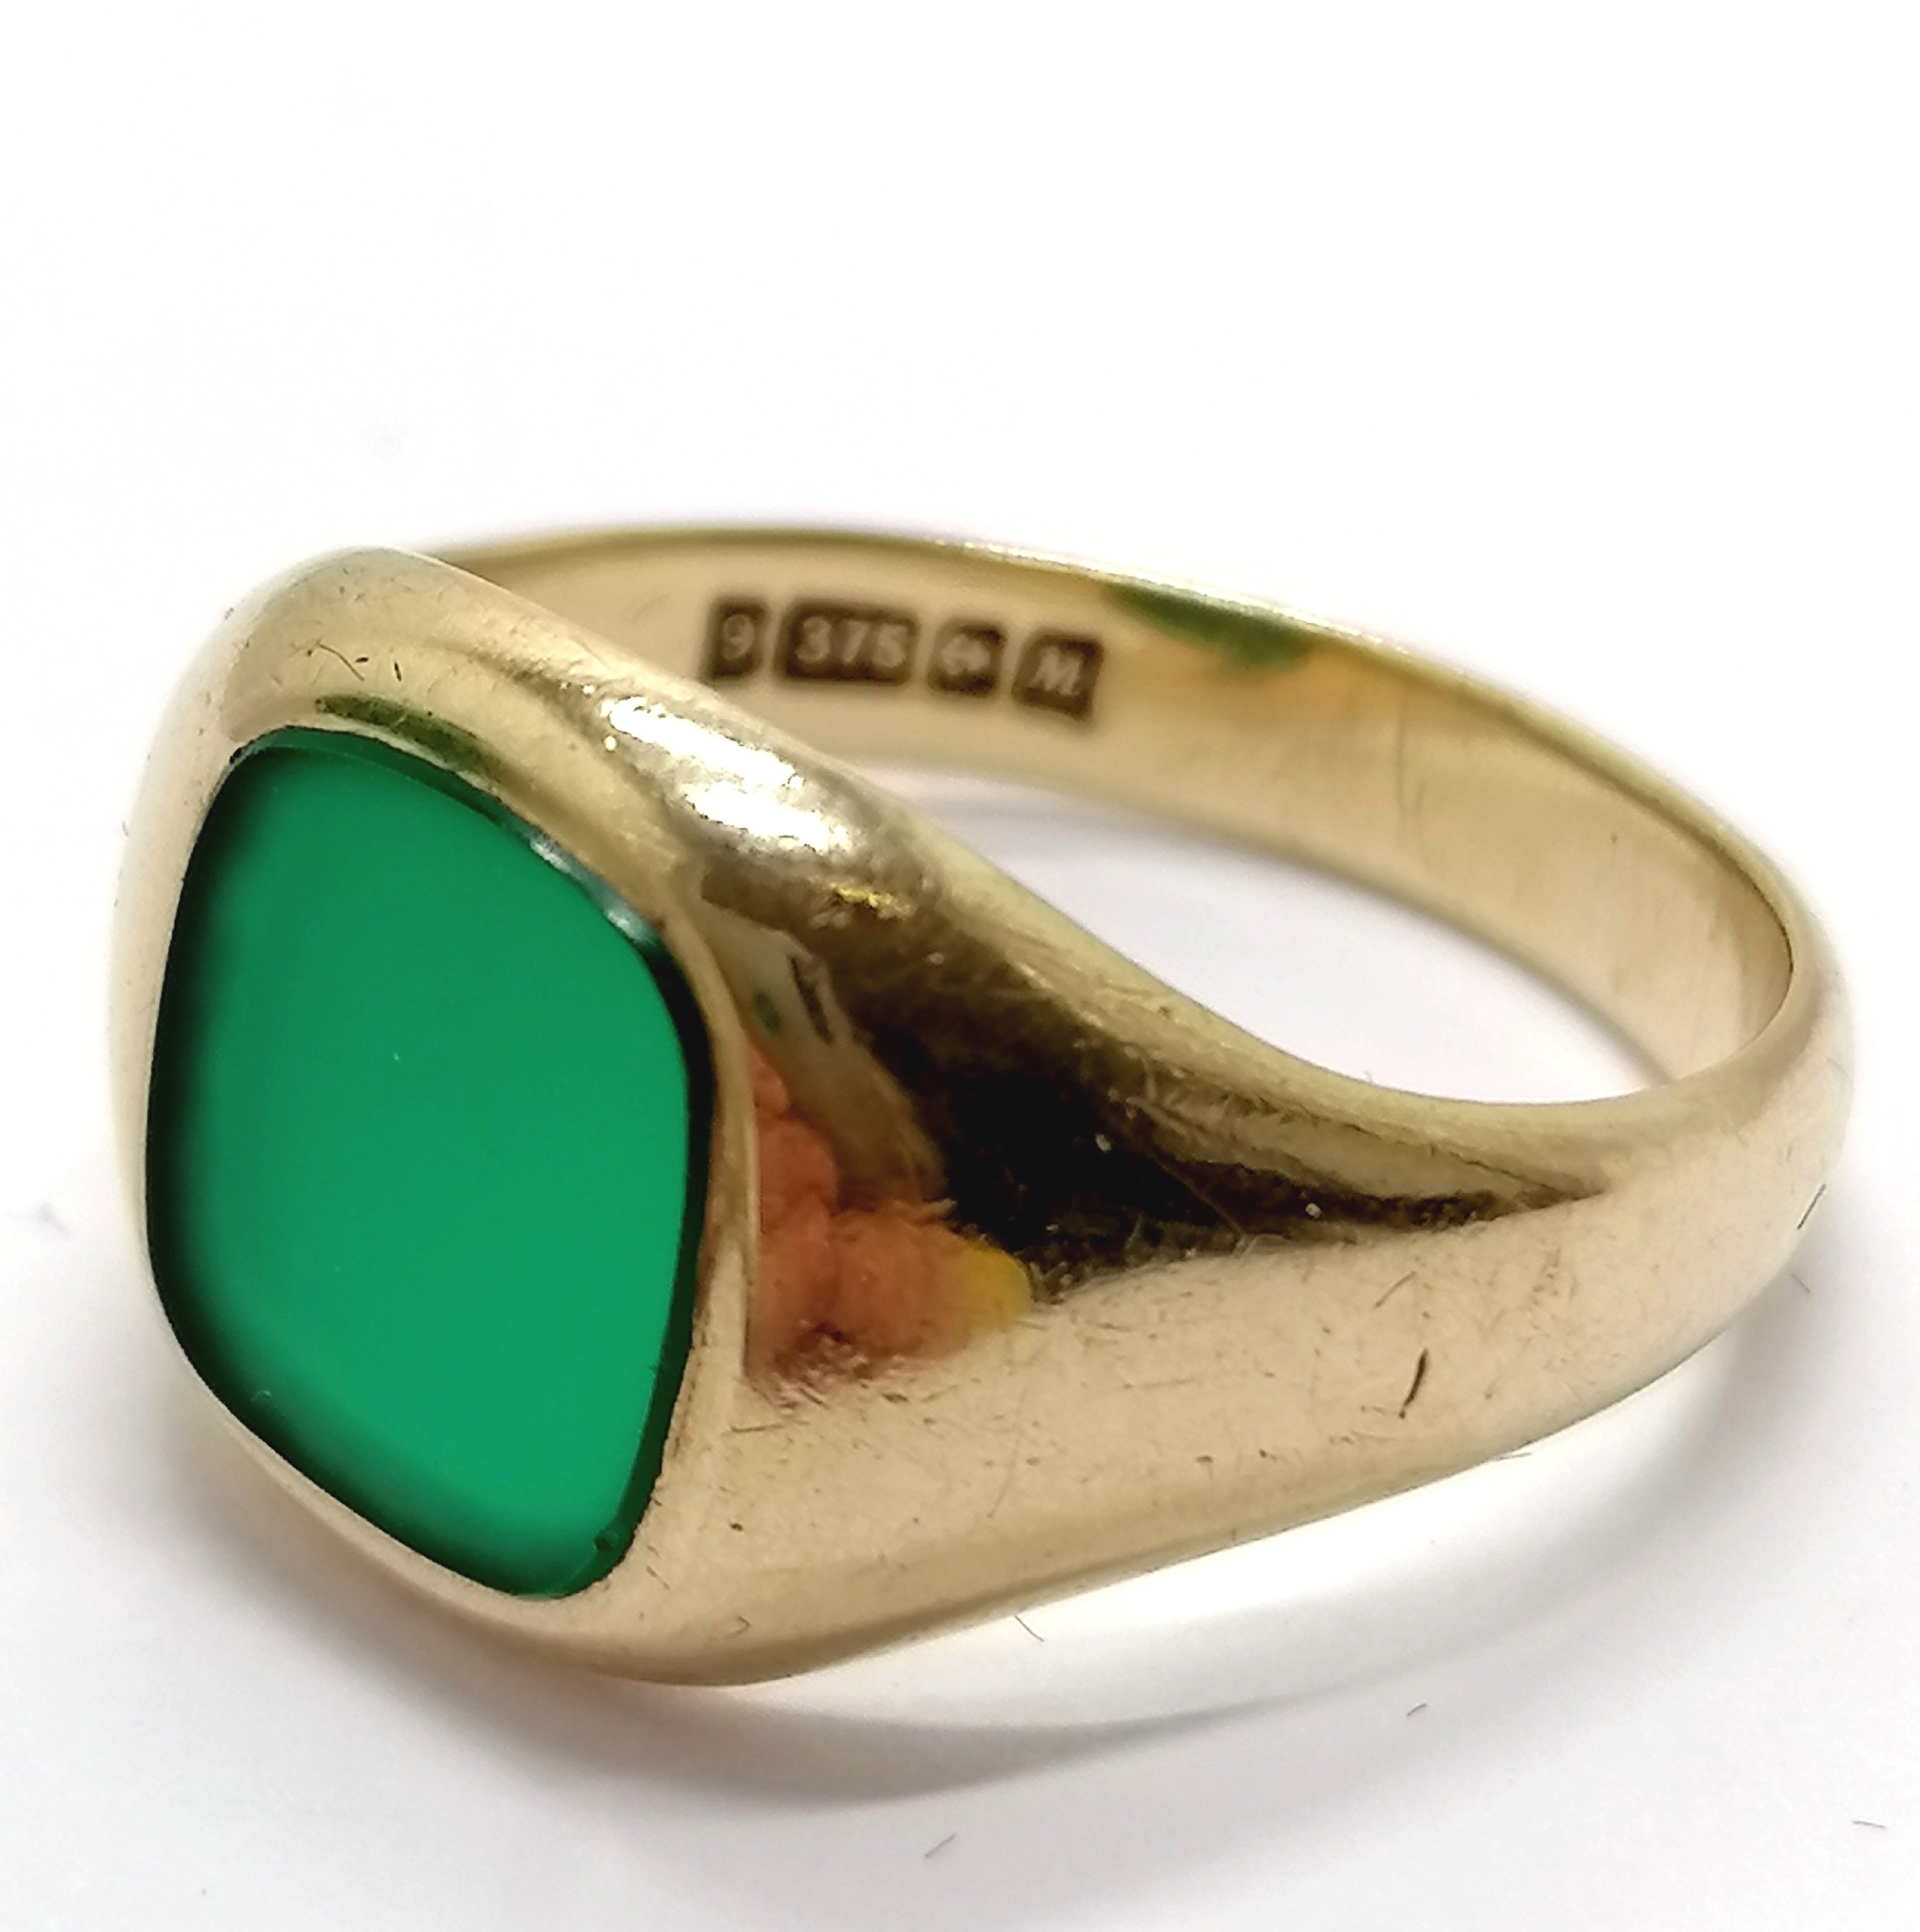 1961 9ct hallmarked gold green agate set signet ring - size U & 6.2g total weight